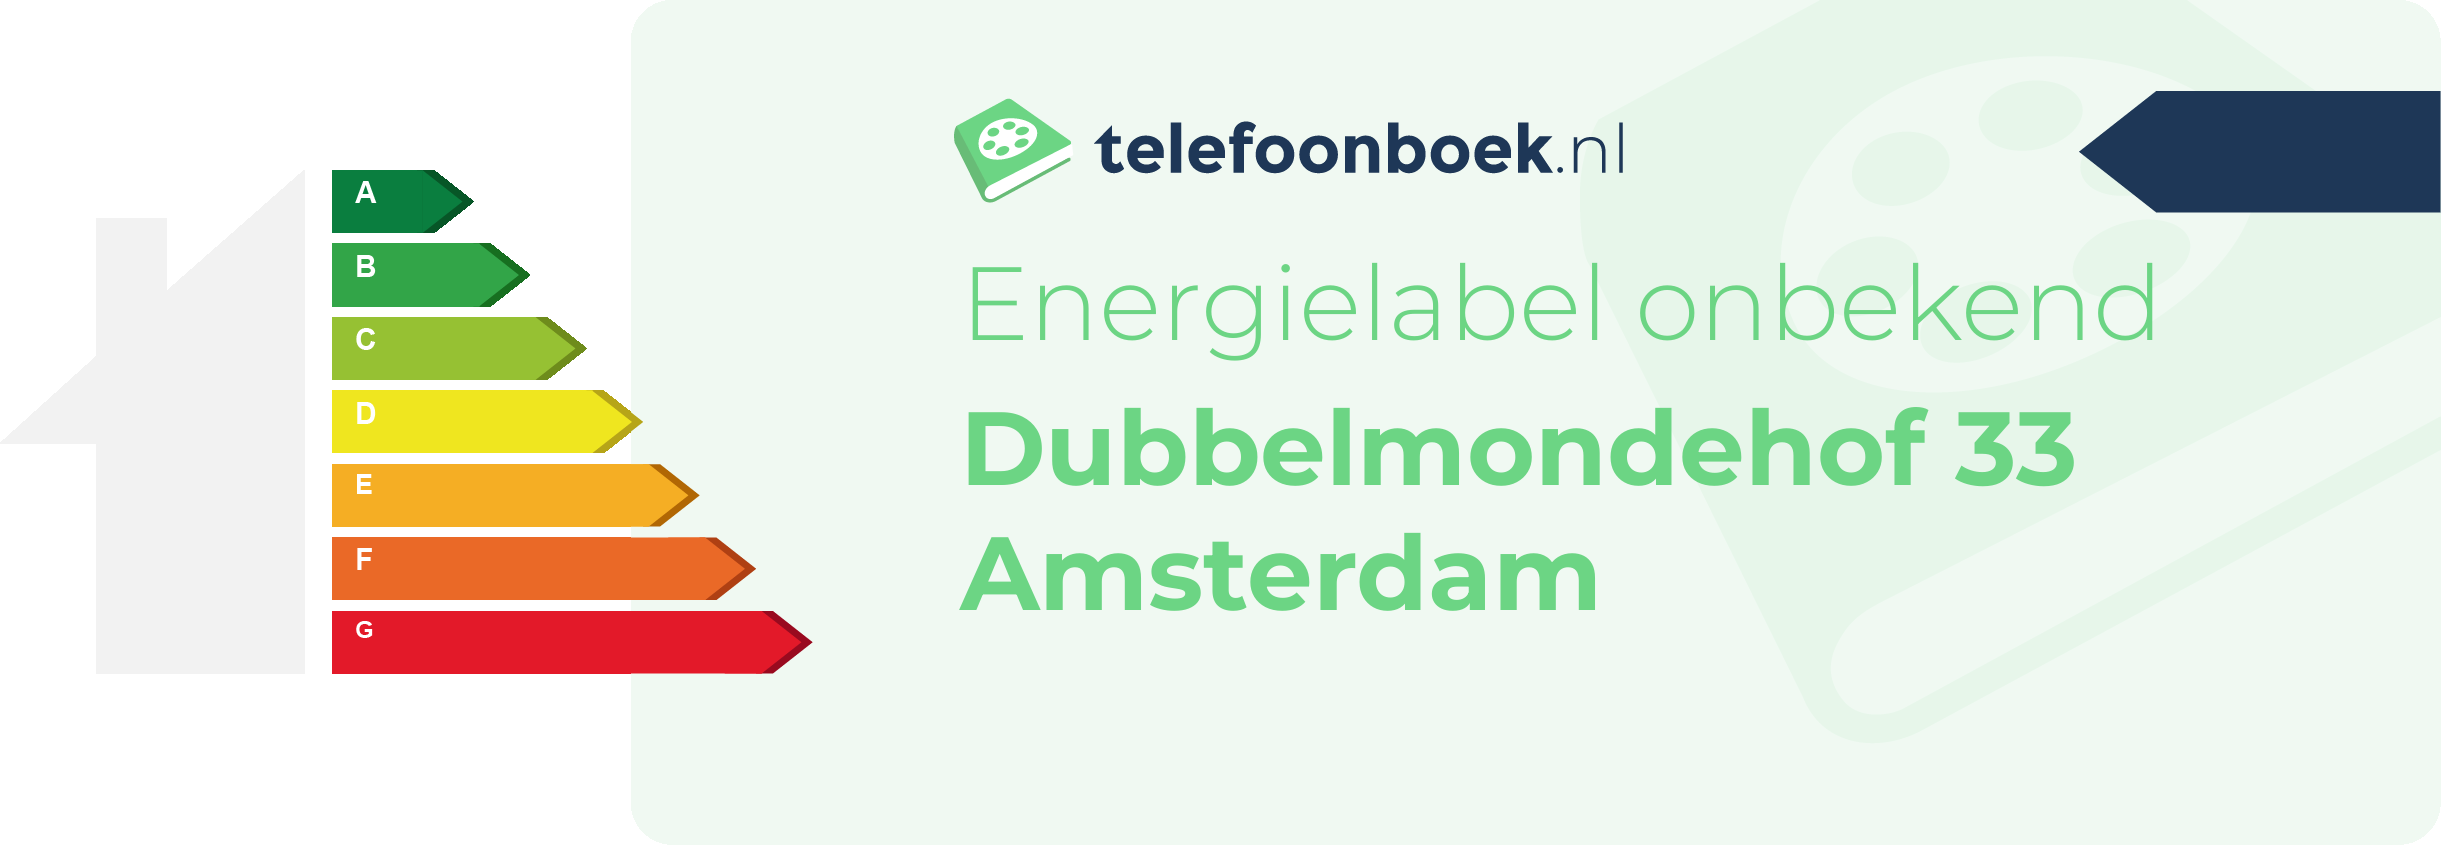 Energielabel Dubbelmondehof 33 Amsterdam